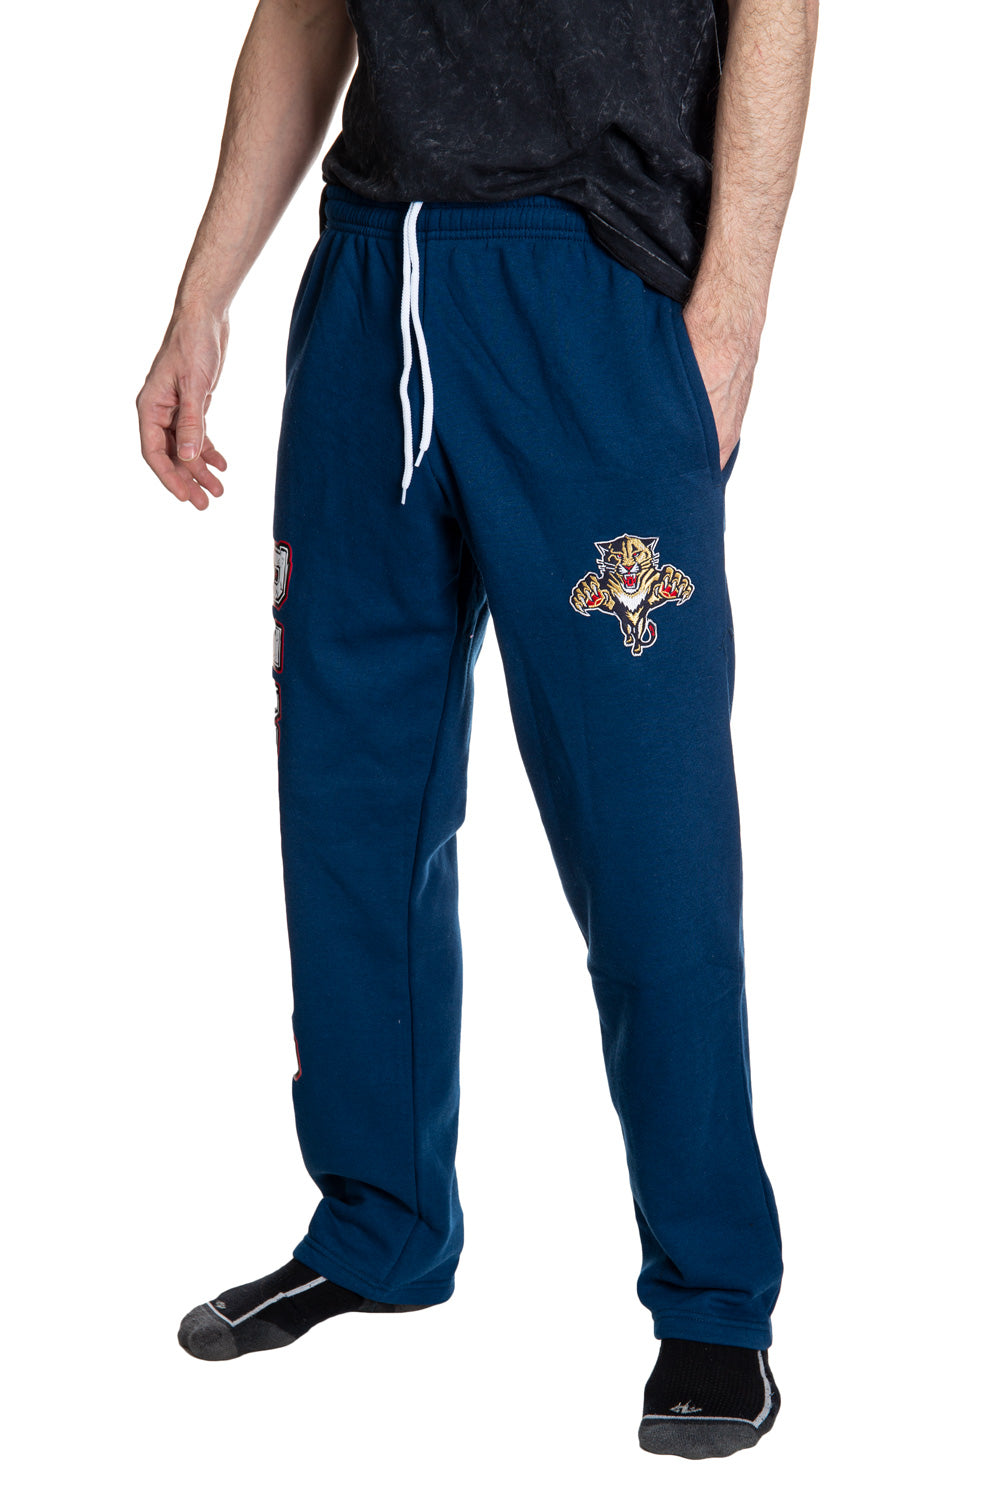 Florida Panthers Premium Fleece Sweatpants Side View of Panthers Logo.